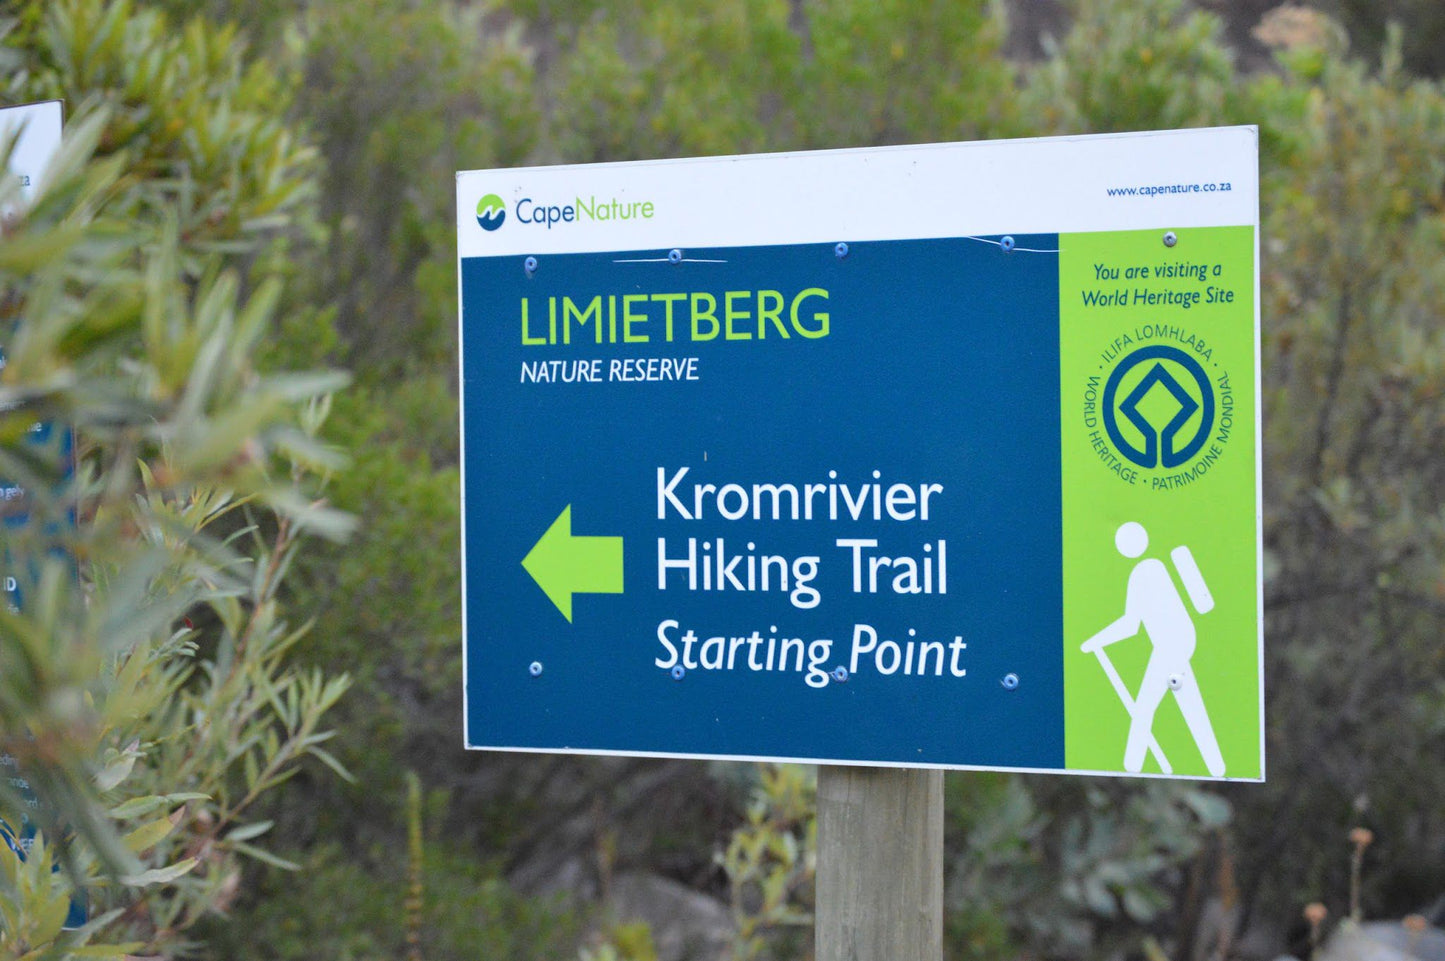  Limietberg Nature Reserve